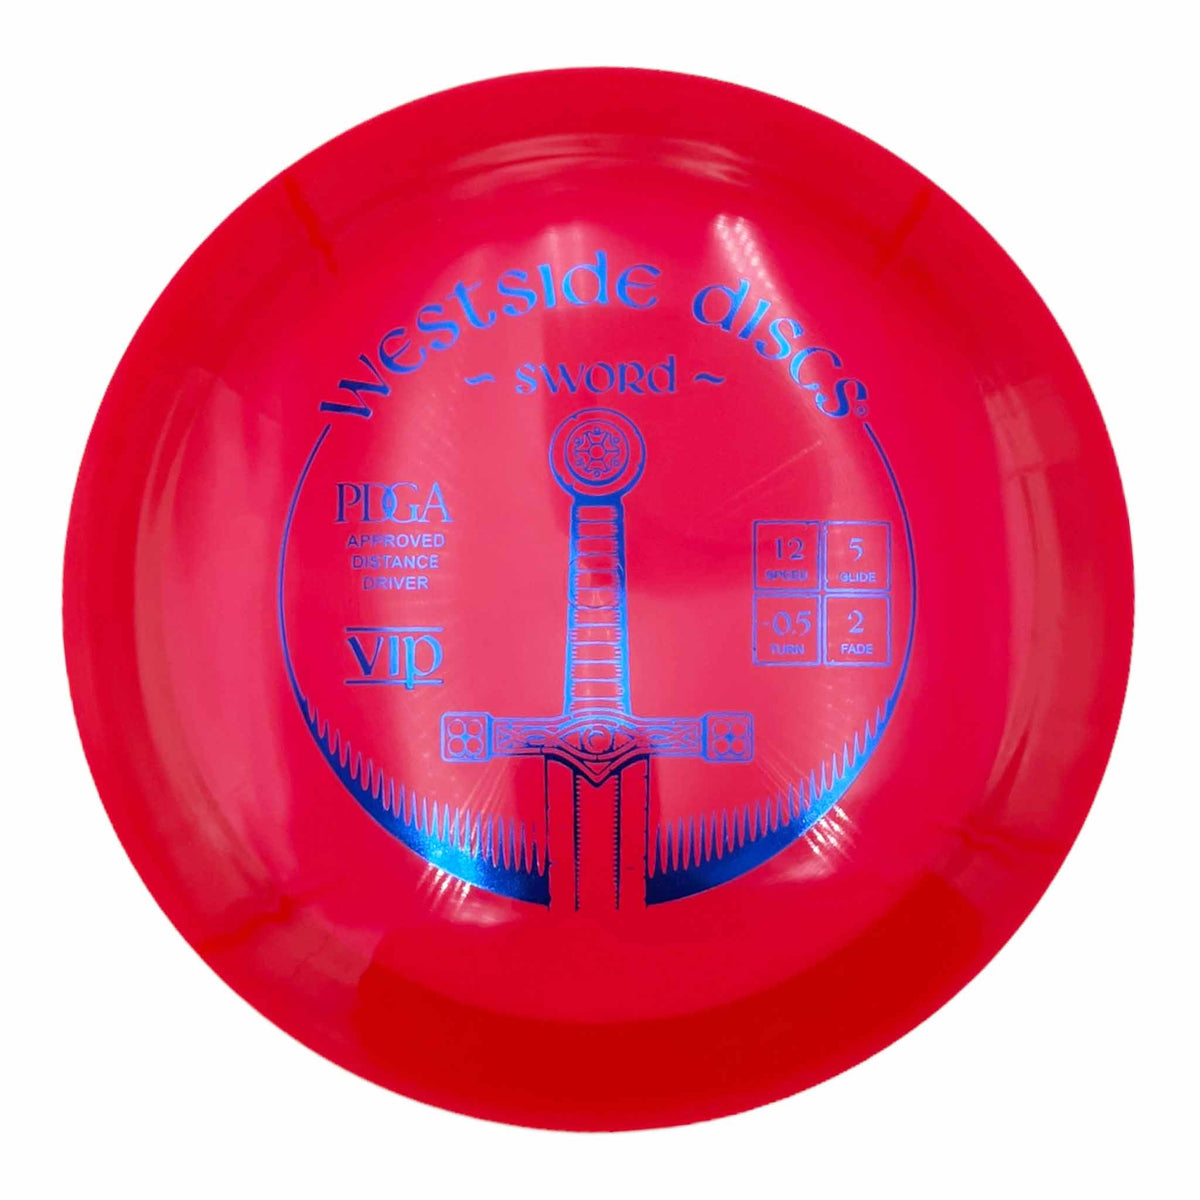 Westside Discs VIP Sword distance driver - Red / Blue